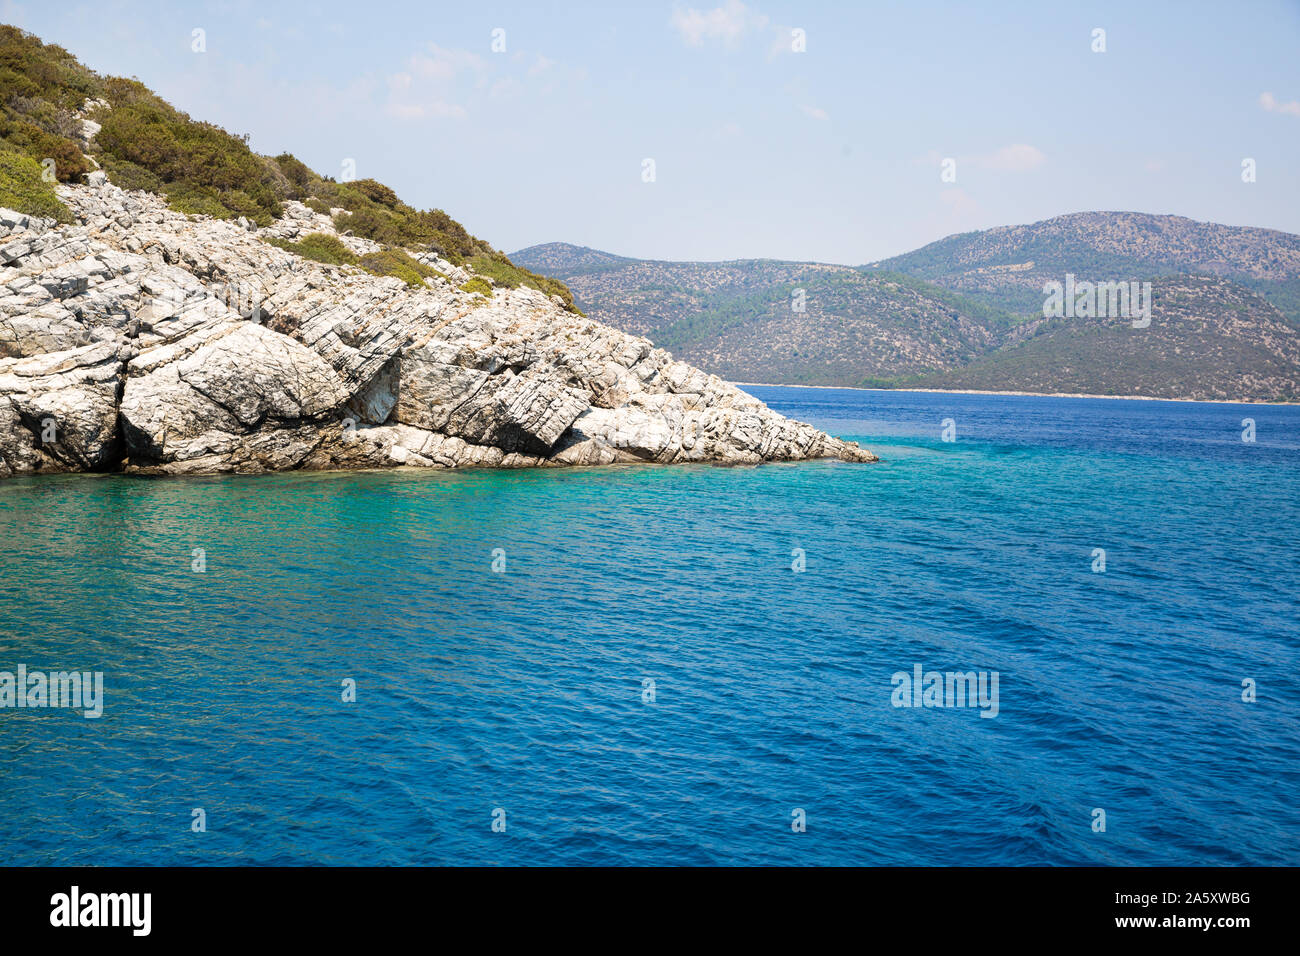 Blue turquoise water of mediterranean sea (aegean sea). Turkey, Bodrum region. Stock Photo